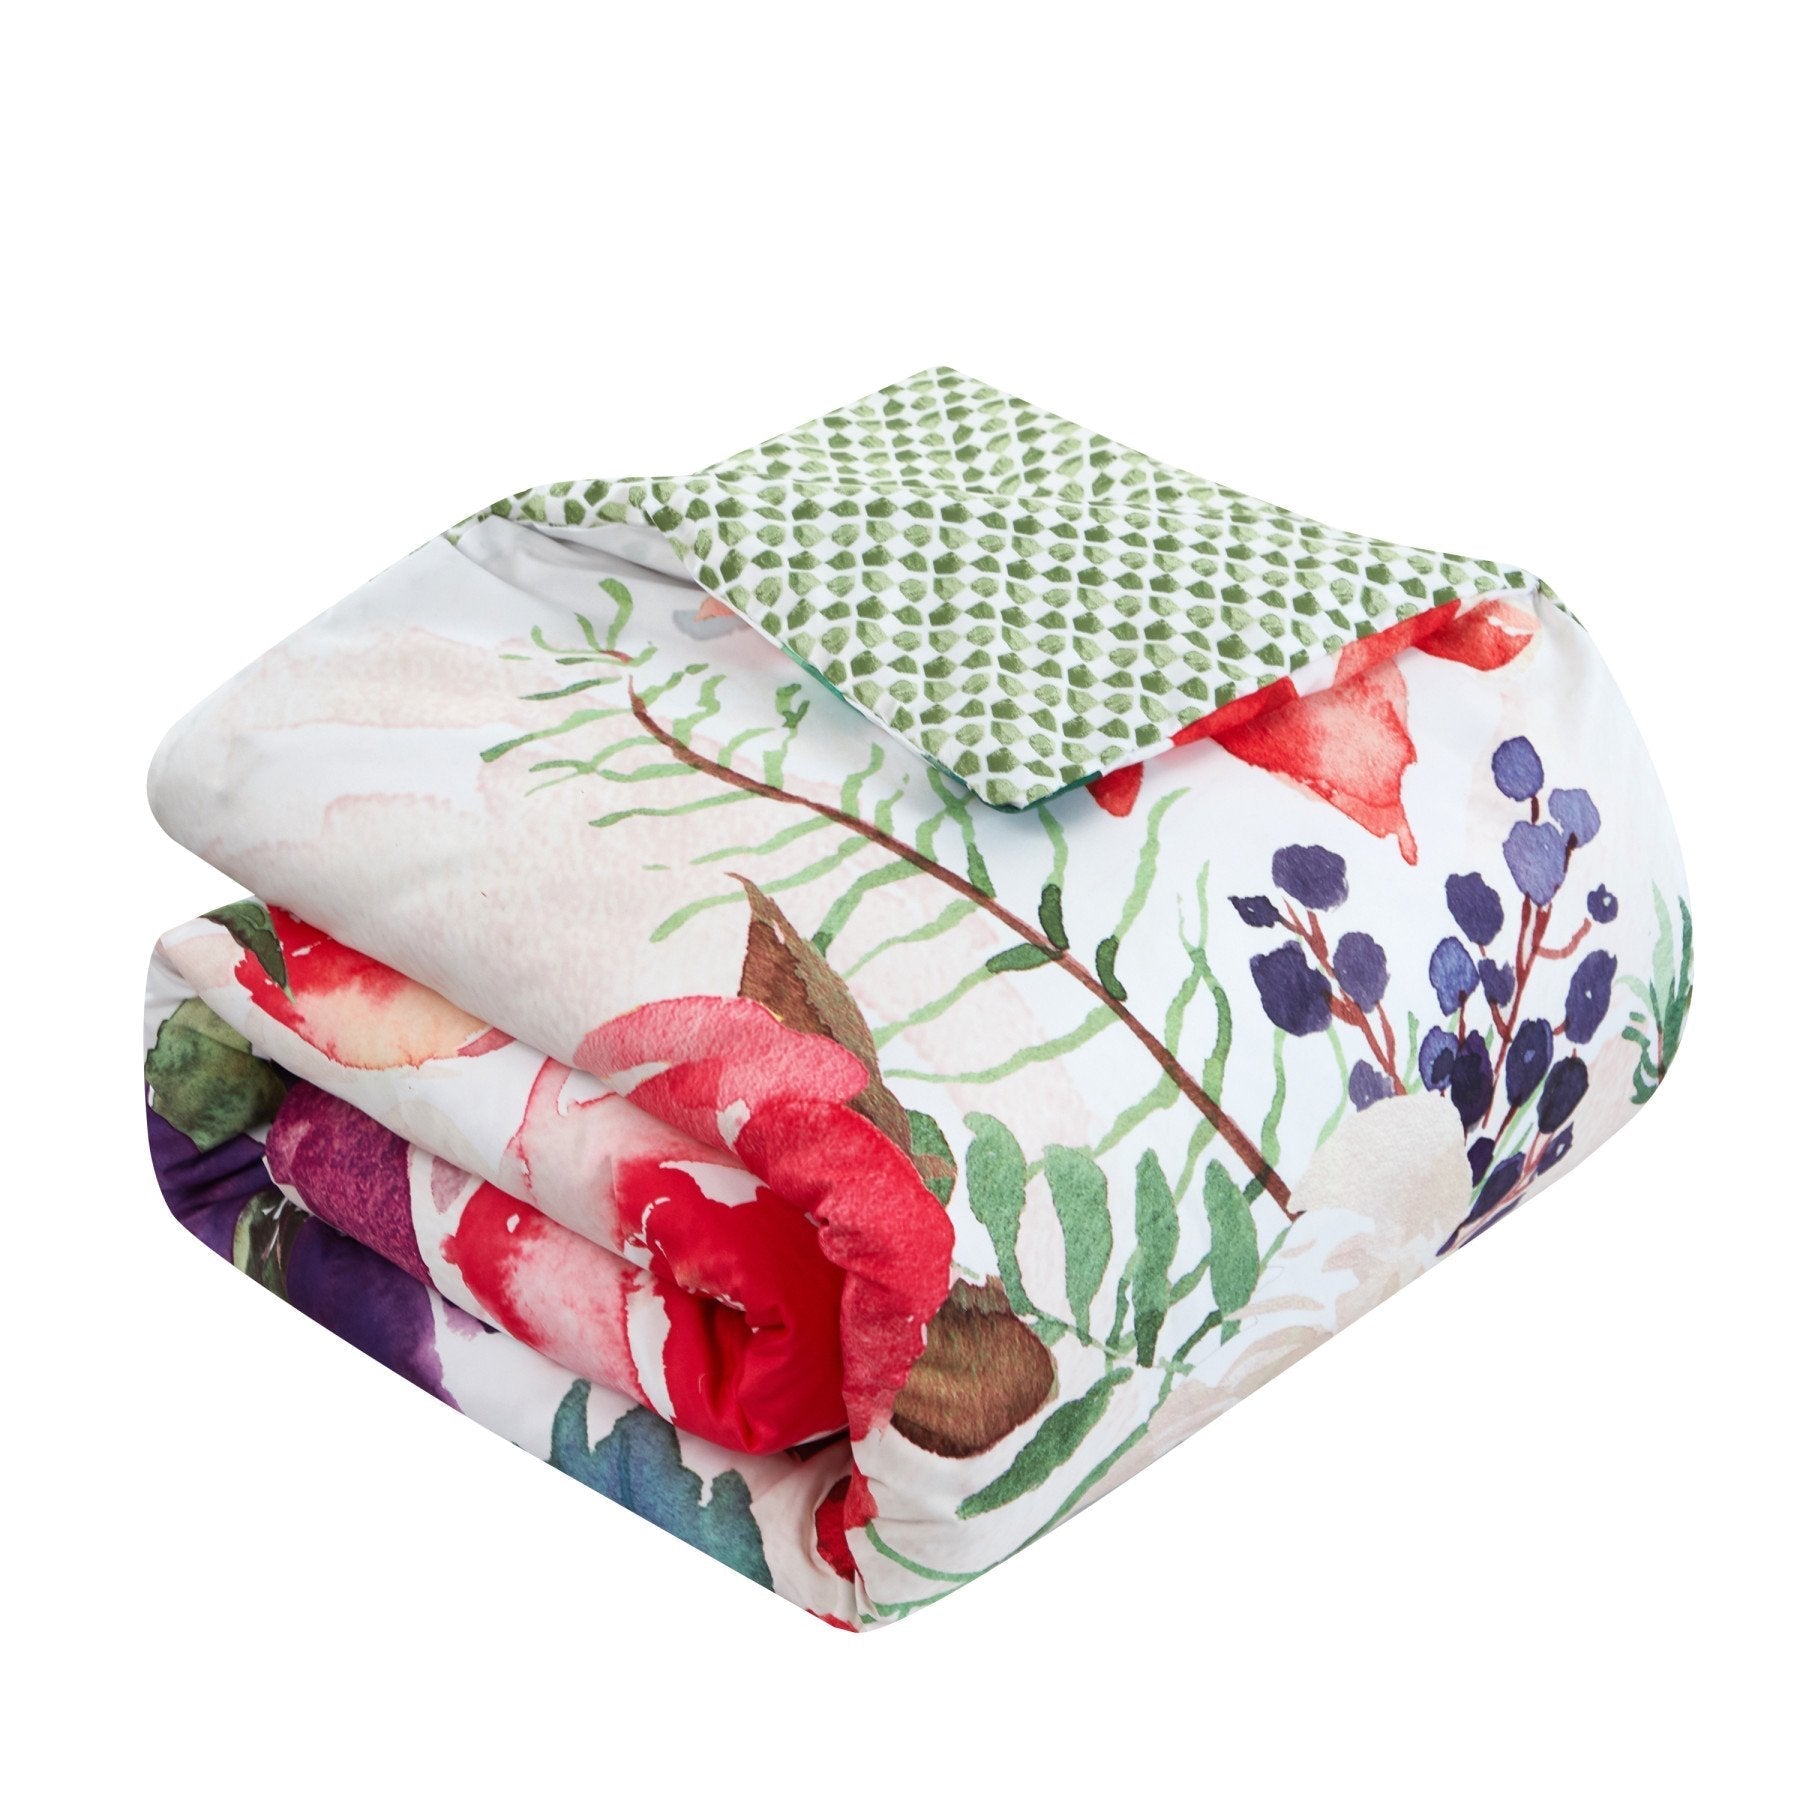 Philia 5 Piece Floral Comforter Set